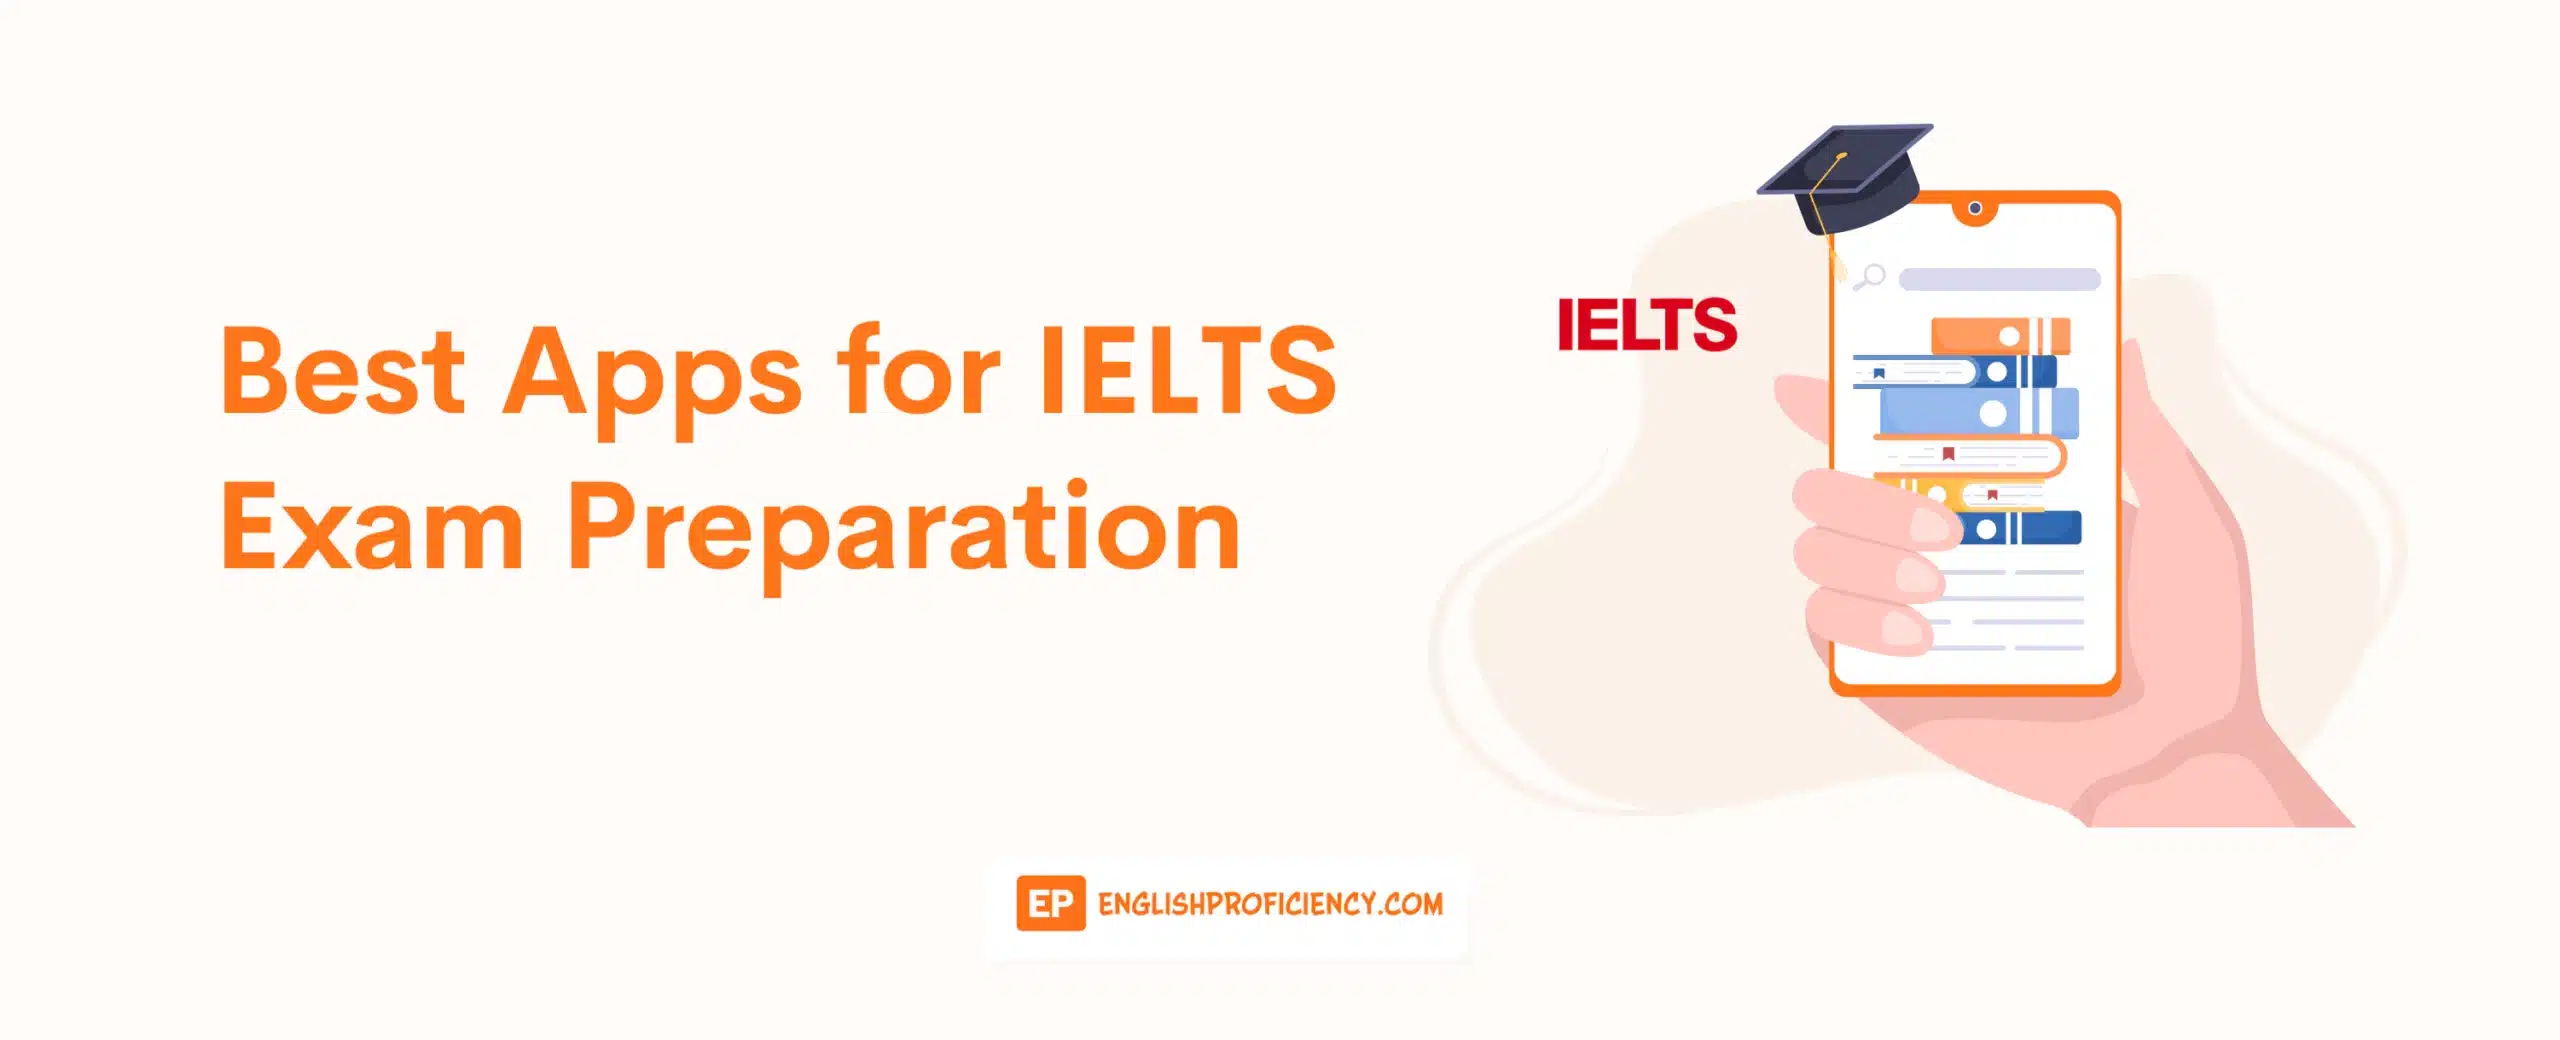 Best Apps for IELTS Exam Preparation